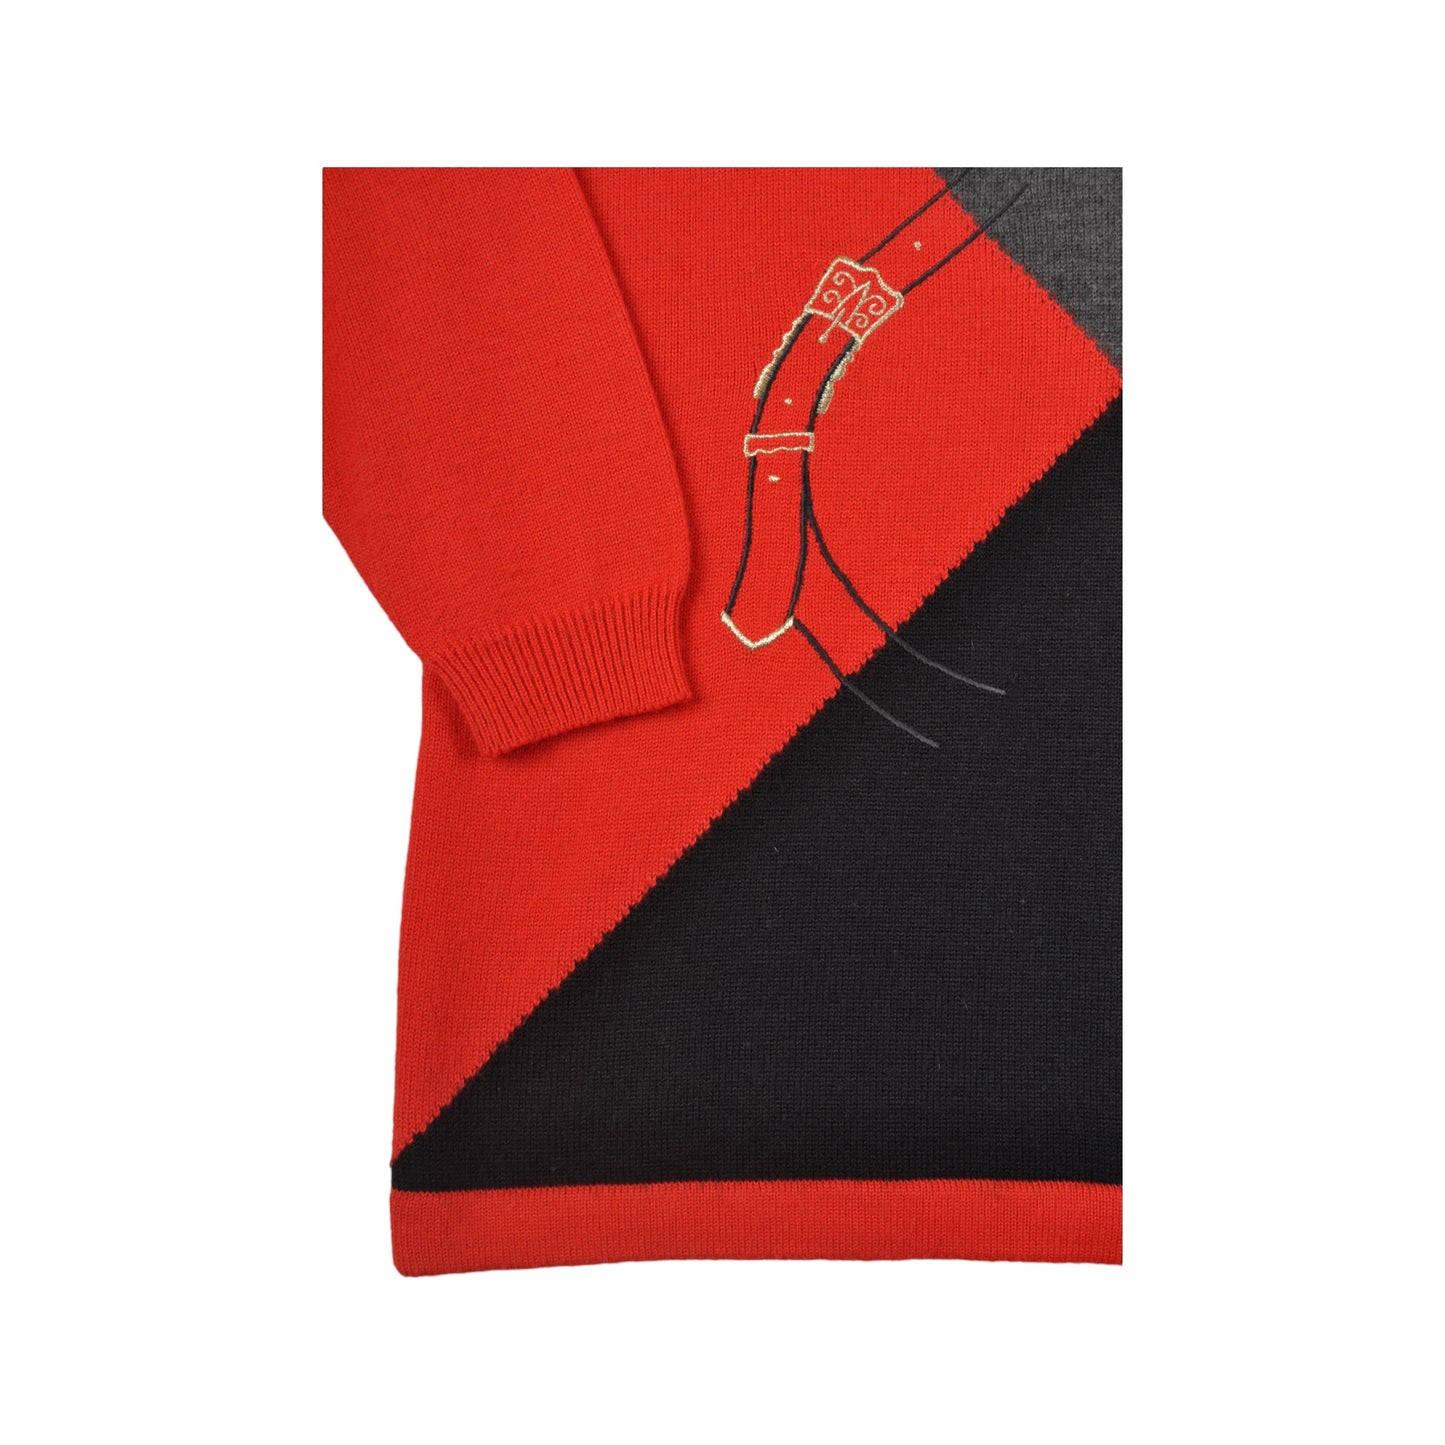 Vintage Knitwear Sweater Retro Pattern Red/Black Ladies Medium